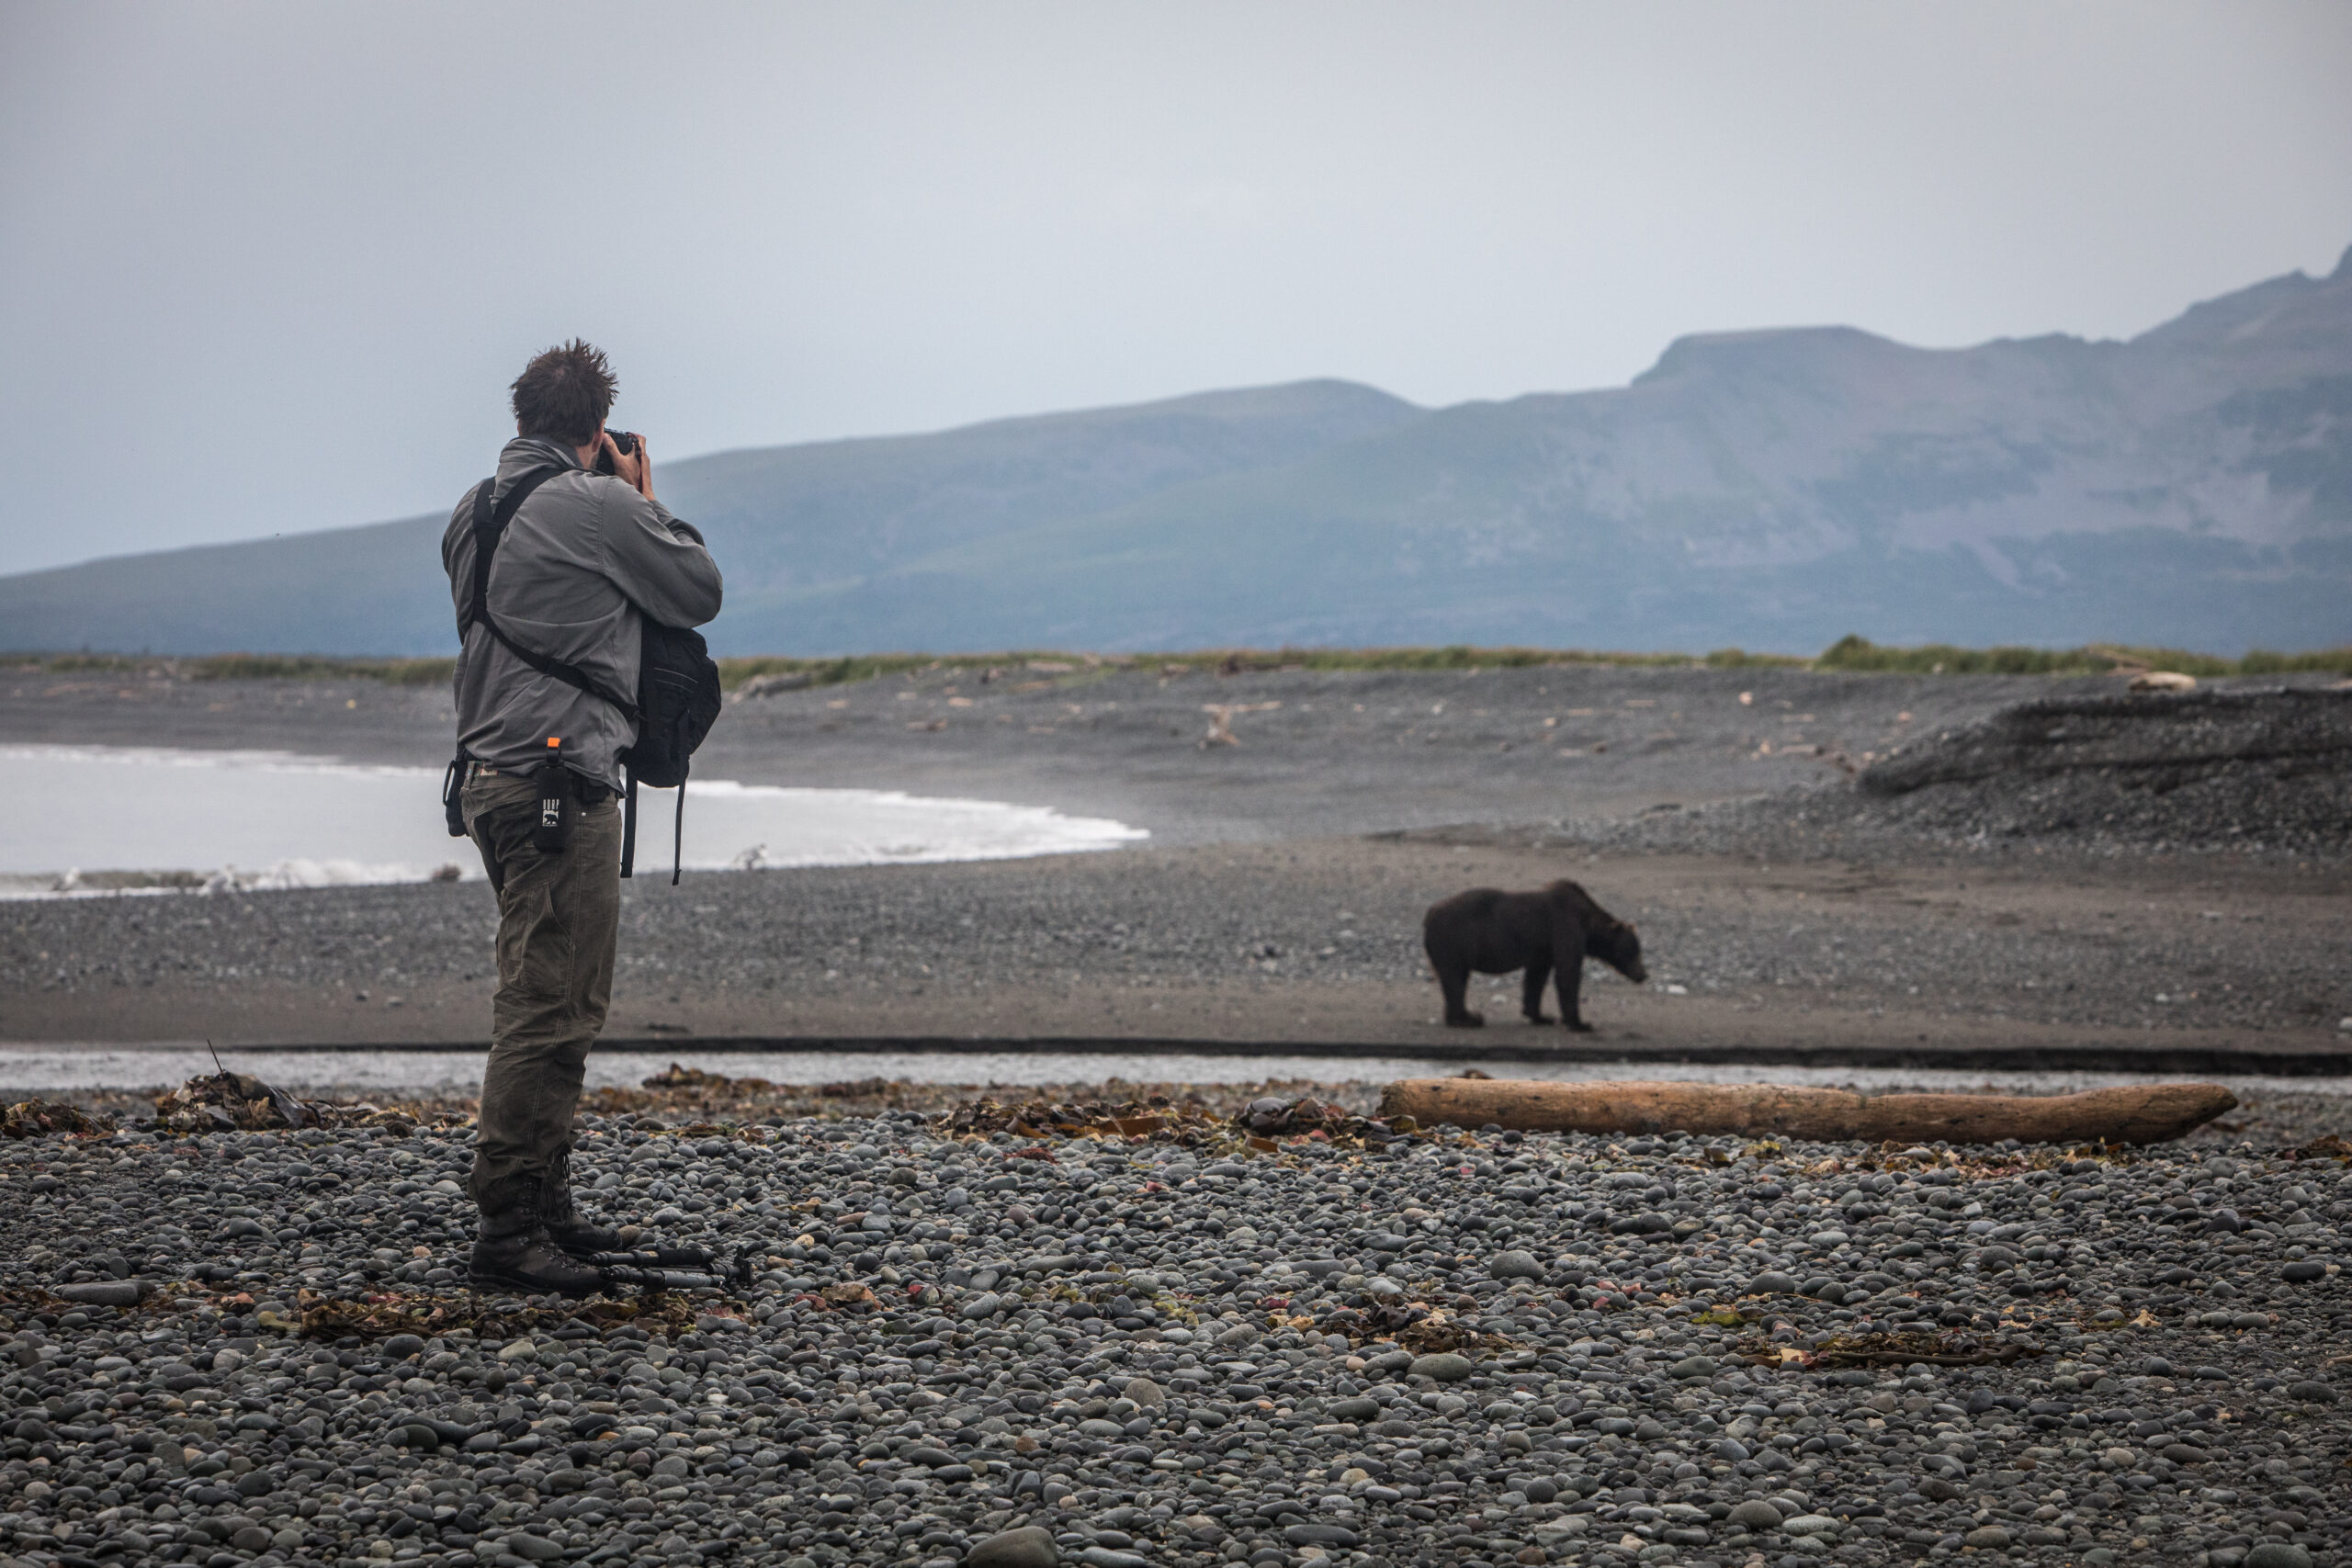 Henry Cookson captures a roaming bear in Alaska